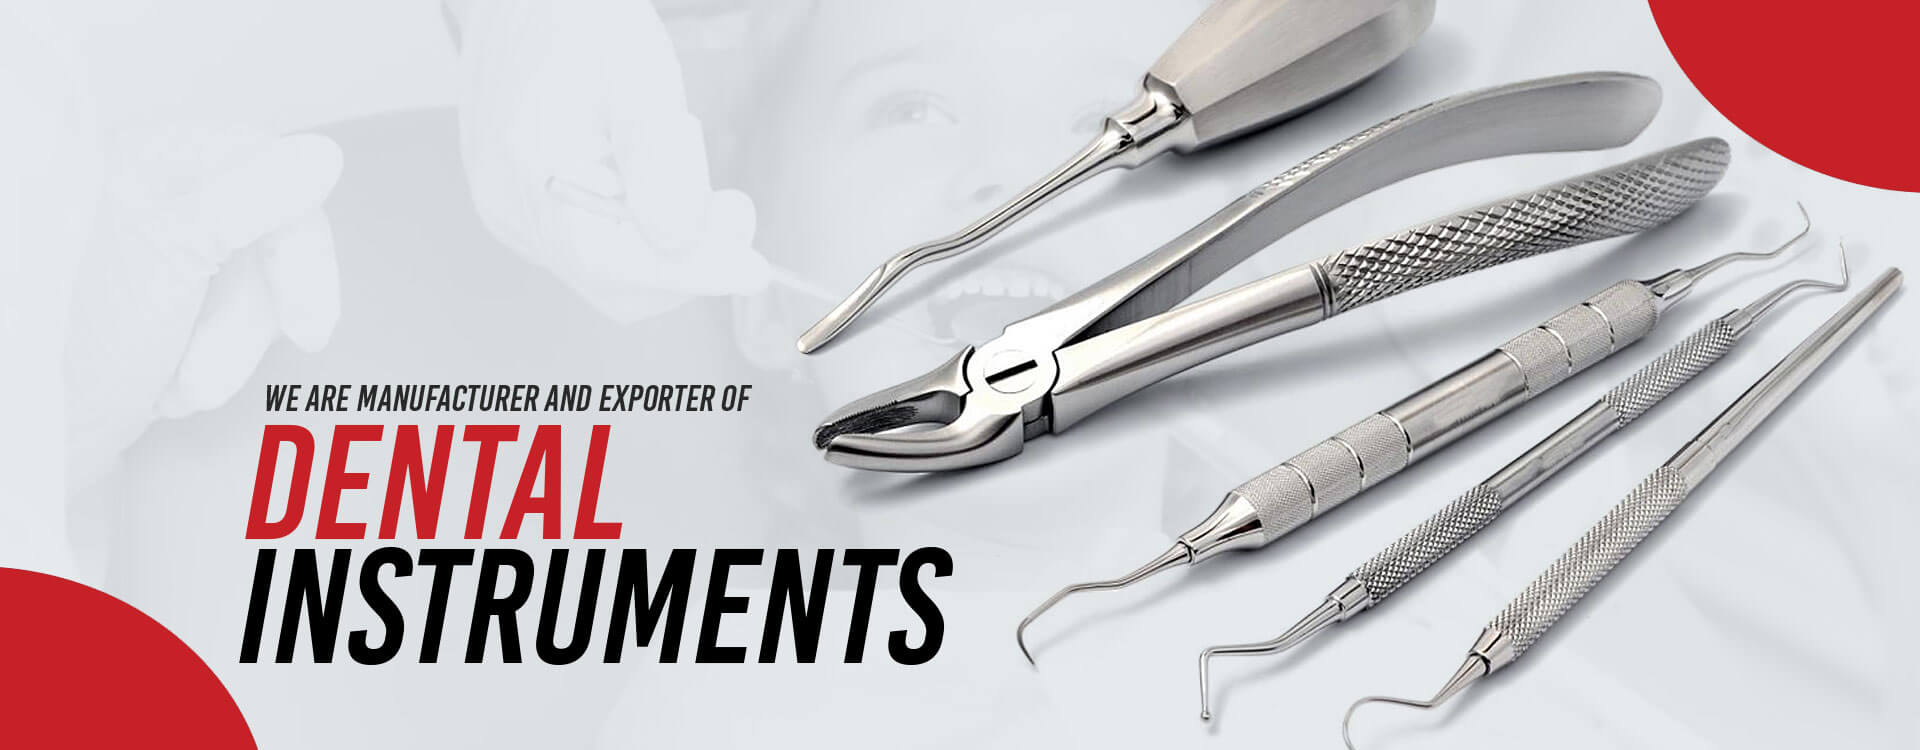 Dental-instruments